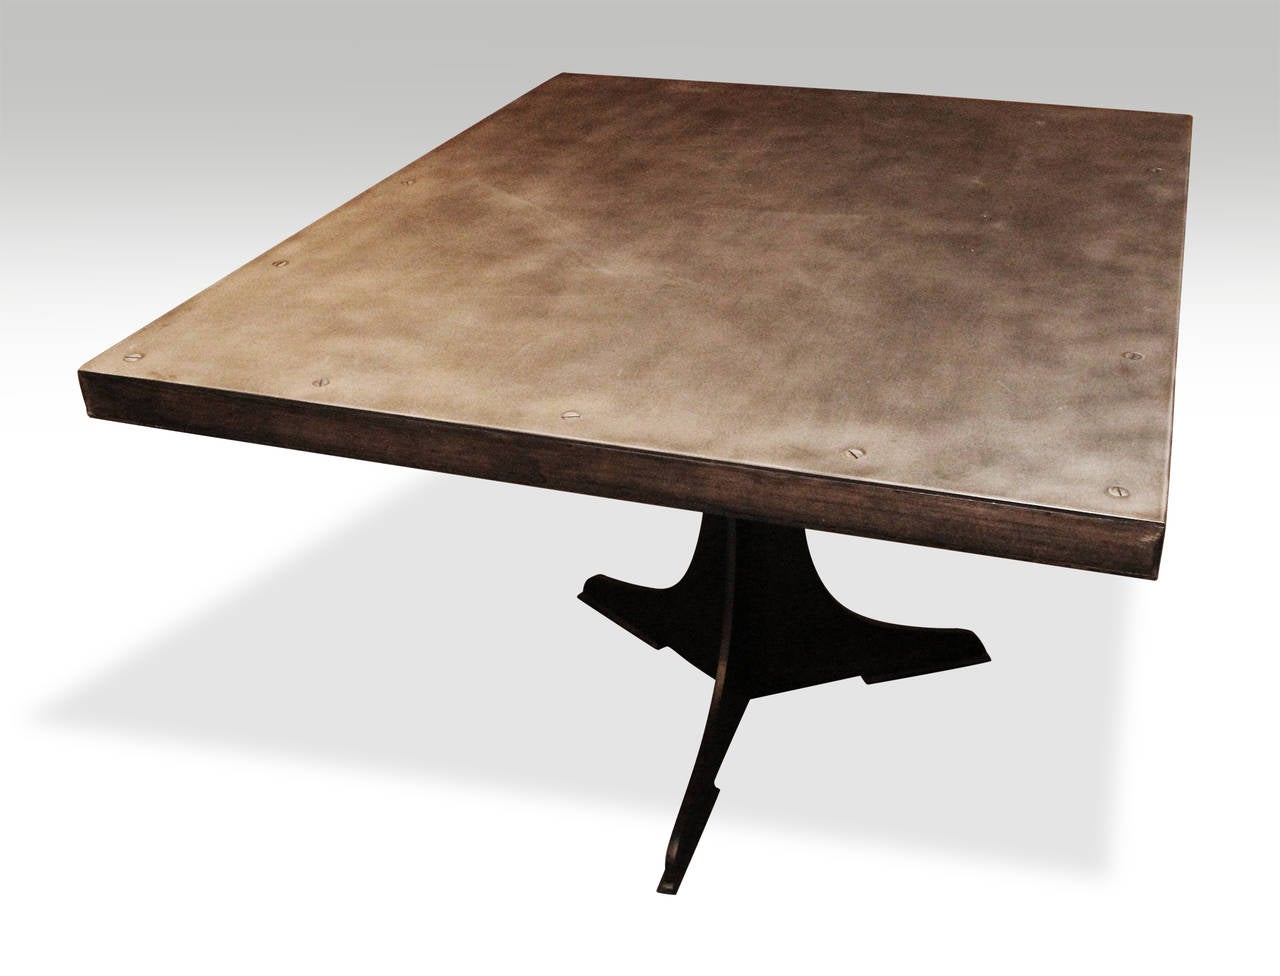 American Hot Rolled Steel Top Table with Welded Steel Tripod Pedestal